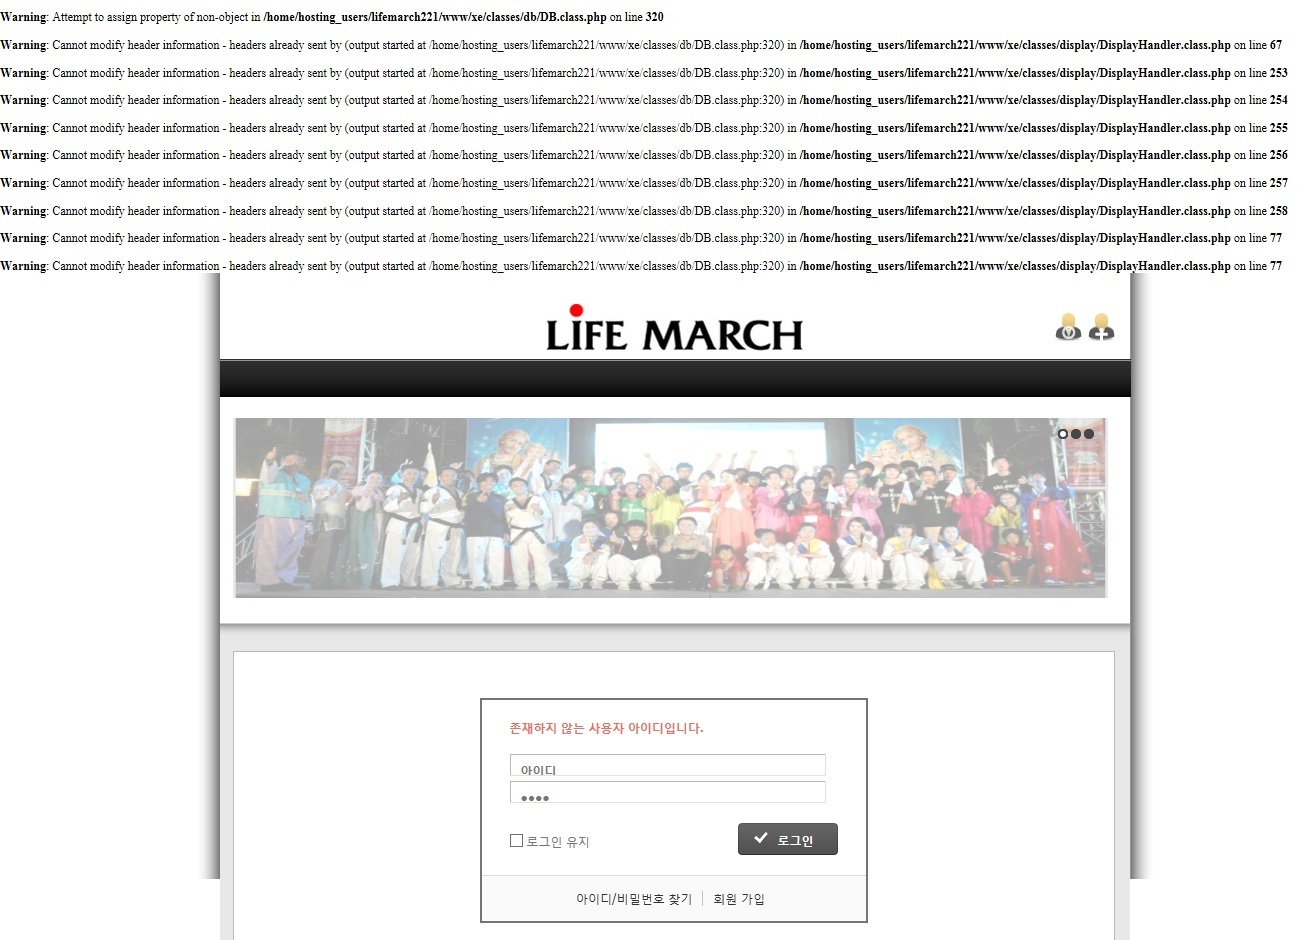 lifemarch_org_20140109_150344.jpg